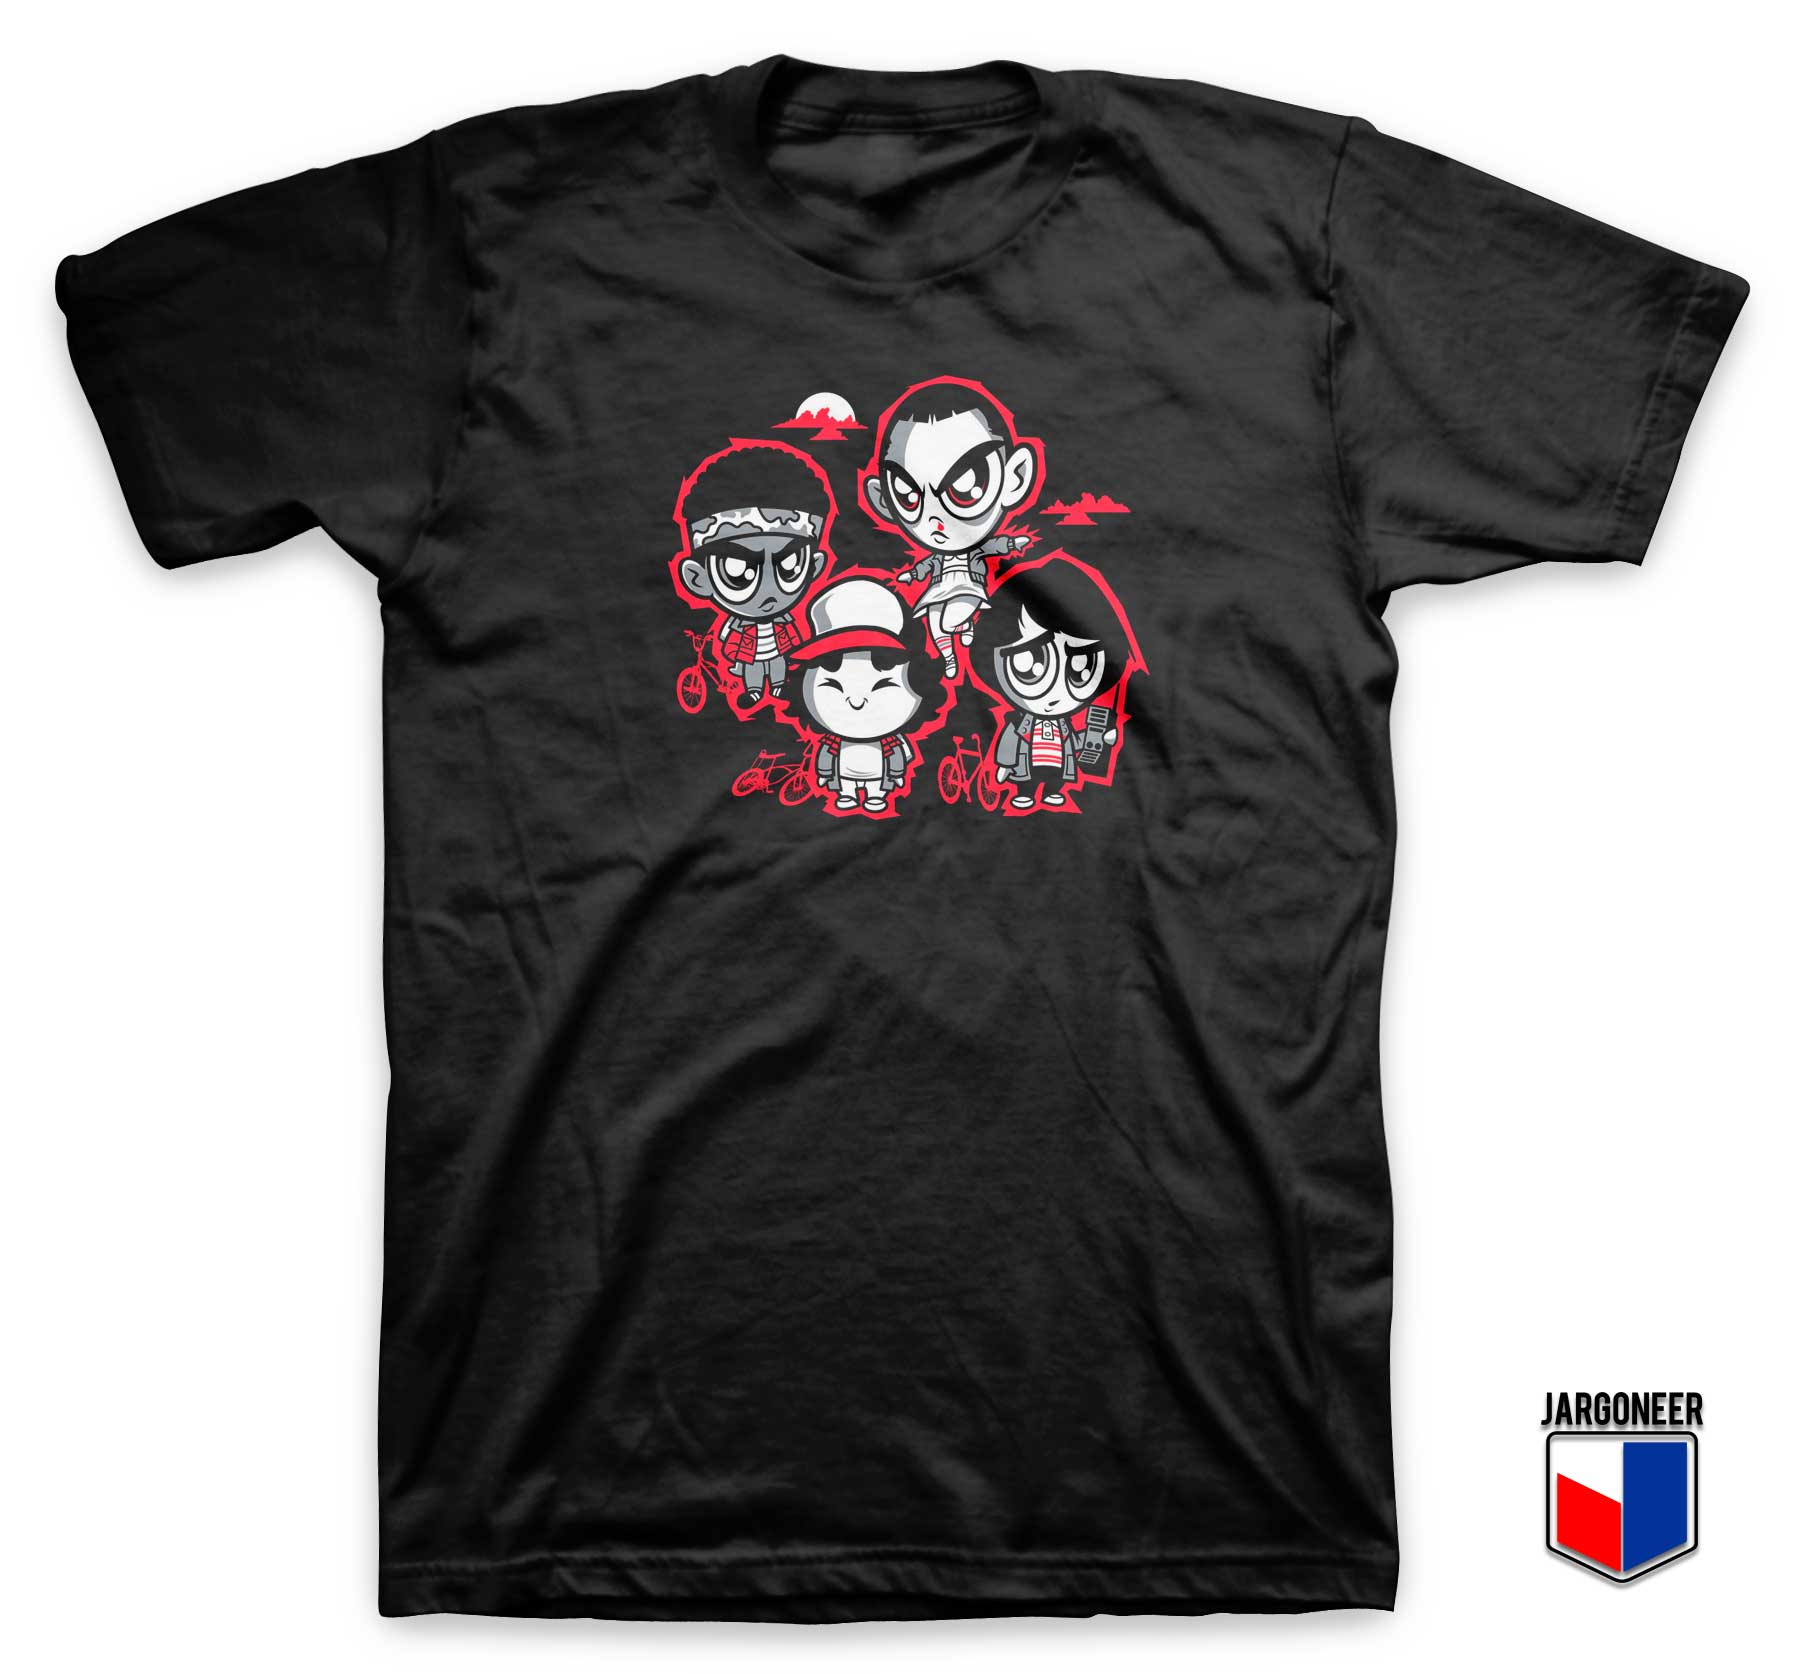 Chibi Stranger Things T Shirt - Shop Unique Graphic Cool Shirt Designs